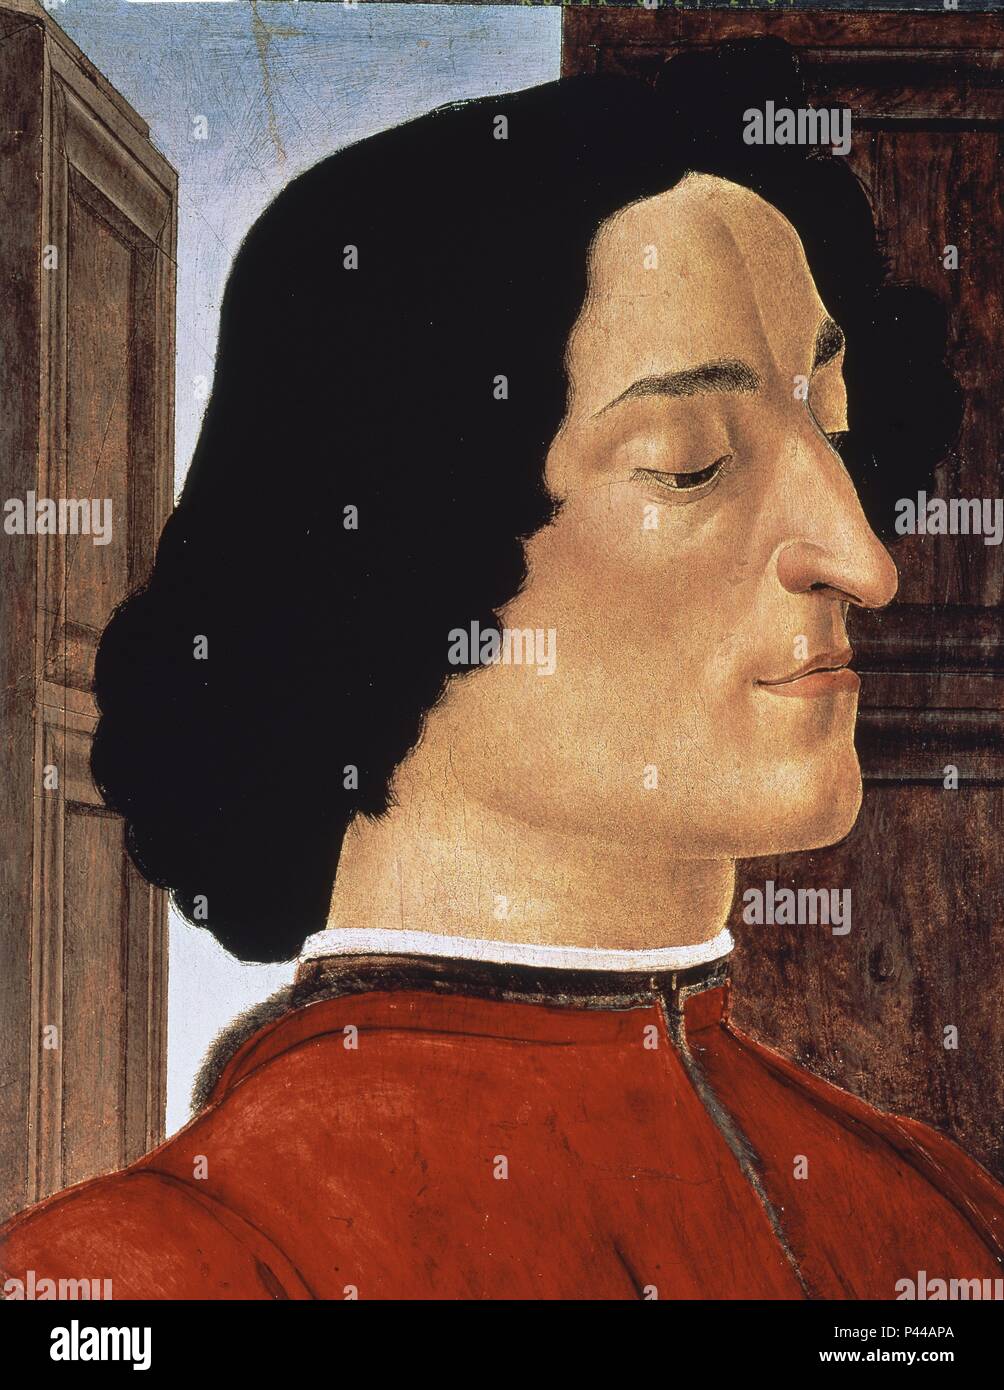 GIULIANO DE MEDICIS - DETALLE DEL ROSTRO (CONJ Nº 75033) - SIGLO XV - RENACIMIENTO ITALIANO. Author: Sandro Botticelli (1445-1510). Location: NATIONAL GALLERY, WASHINGTON D. C. Stock Photo